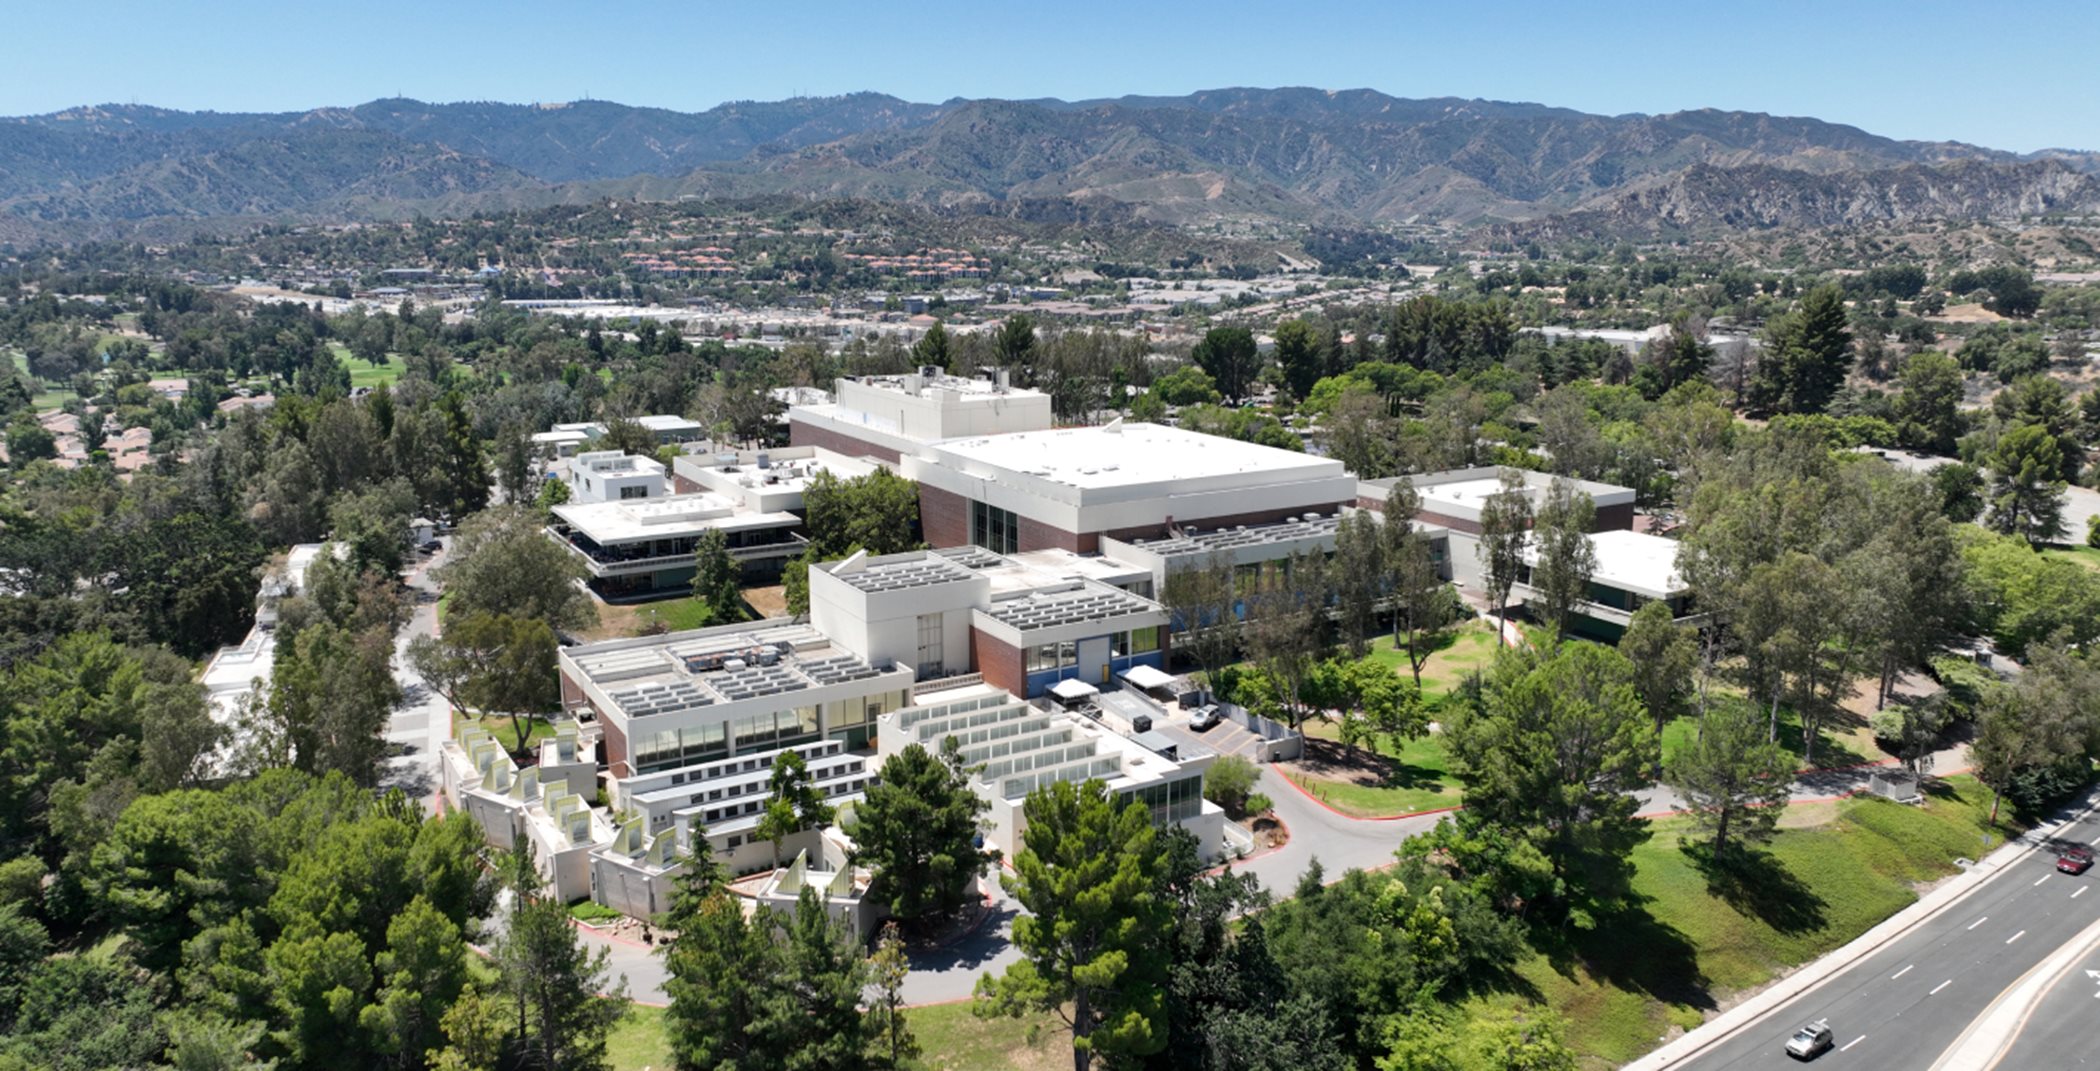 Aerial view of Cal Arts